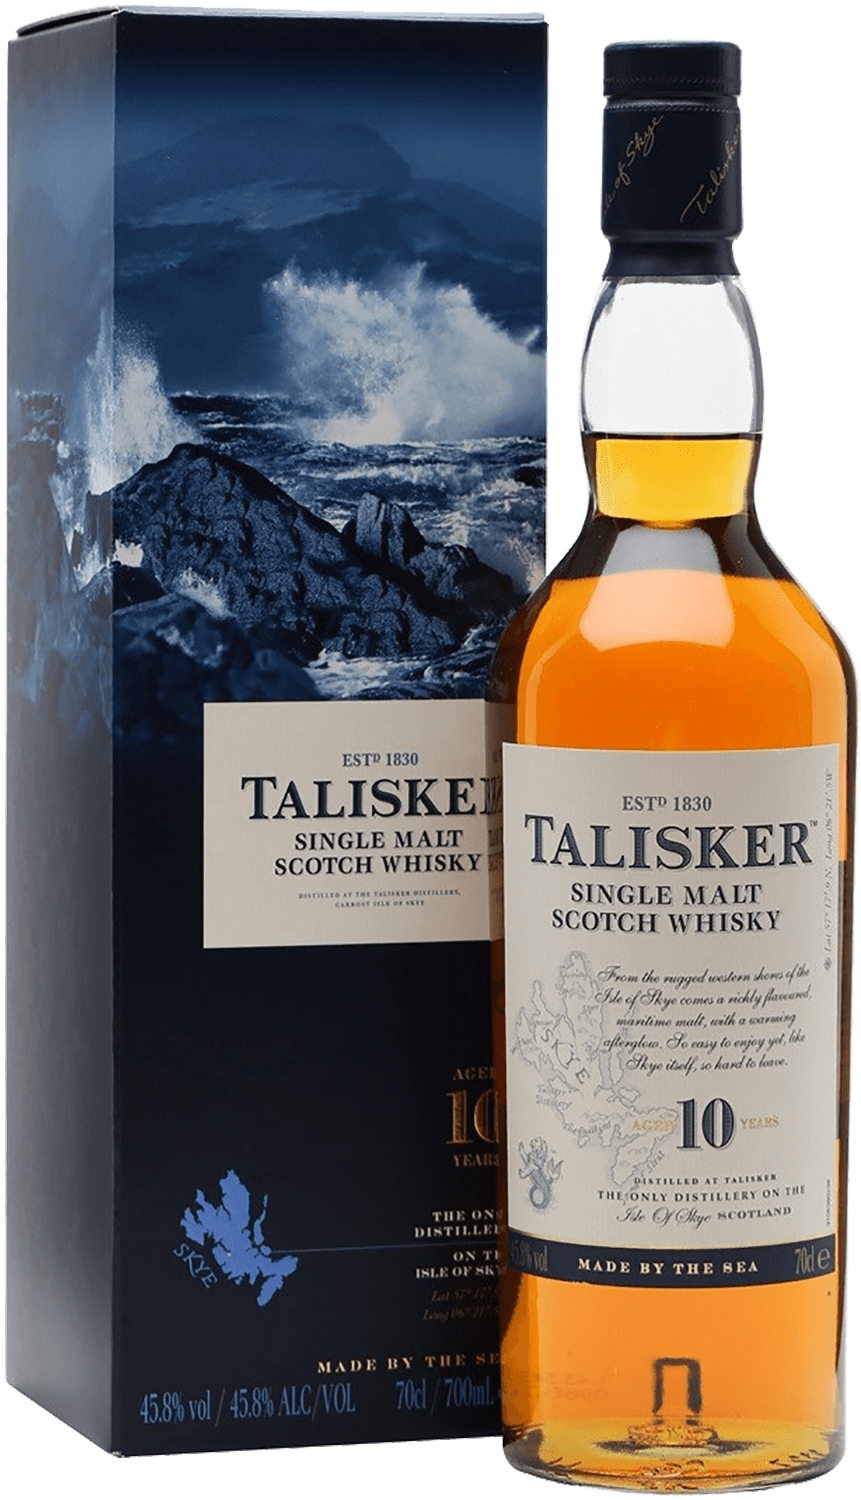 Talisker 10 years single malt scotch whisky (gift box) bladnoch 11 years old single malt scotch whisky gift box